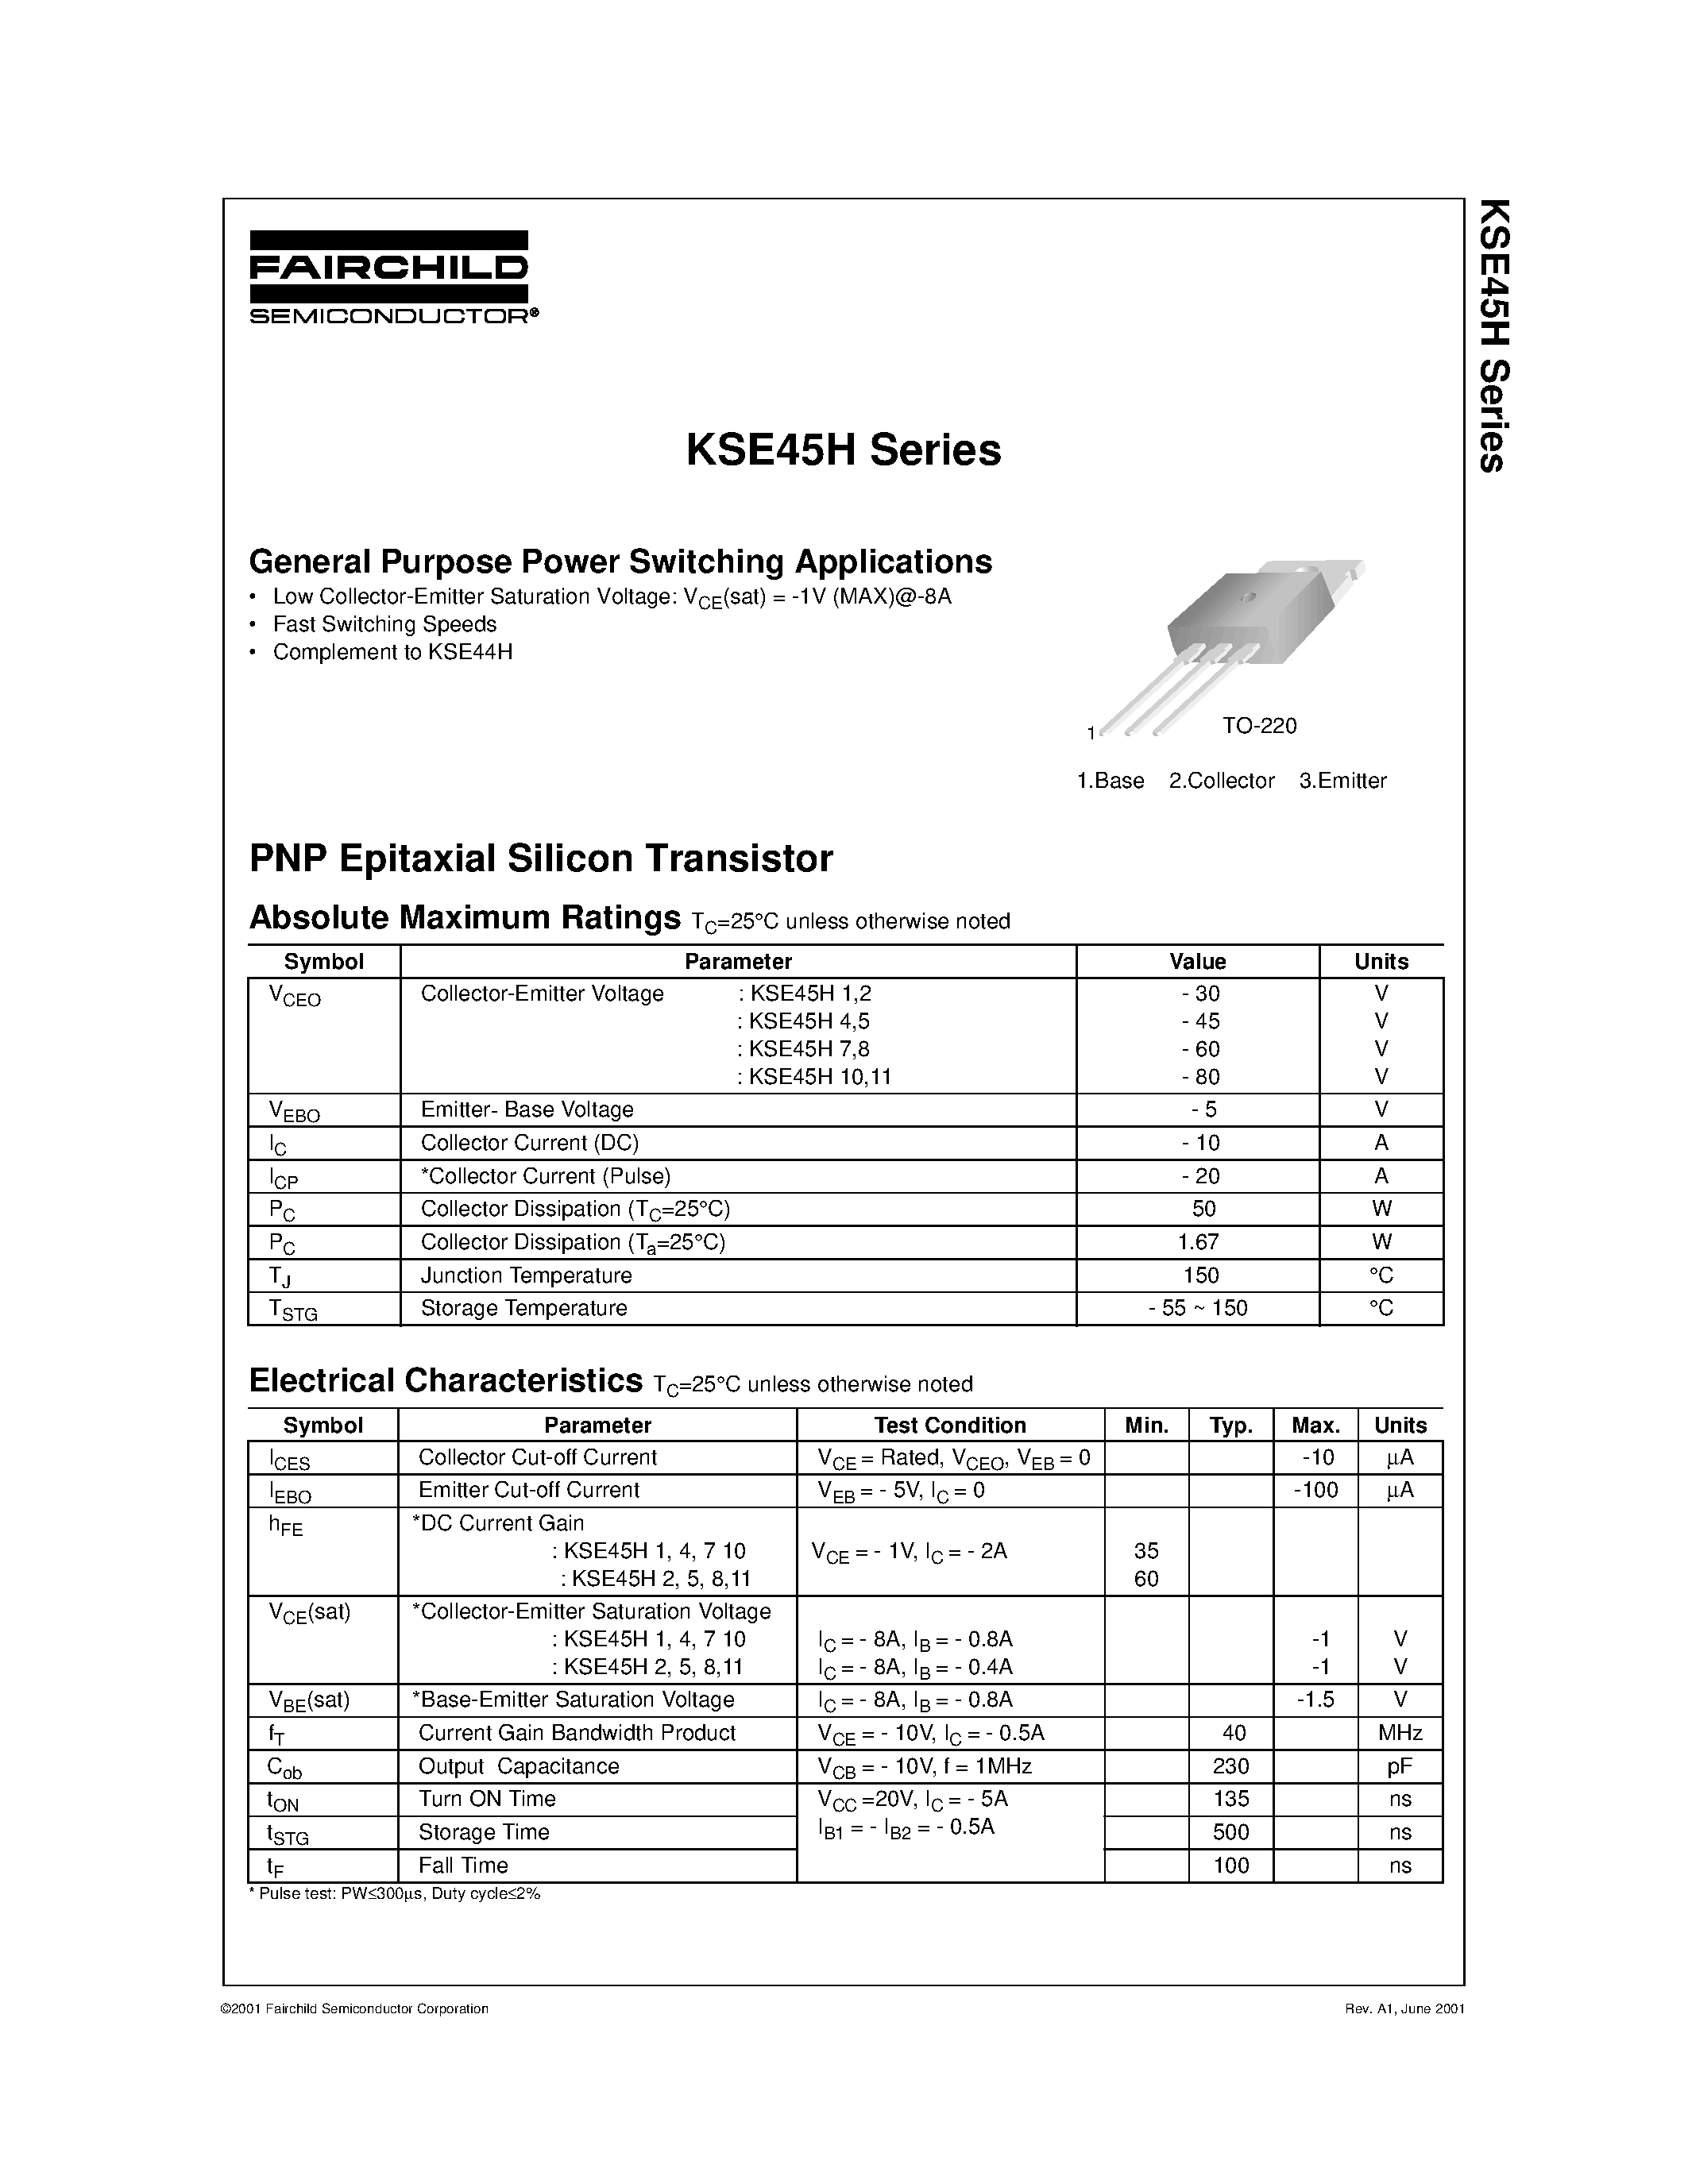 Datasheet KSE45H10 - General Purpose Power Switching Applications page 1